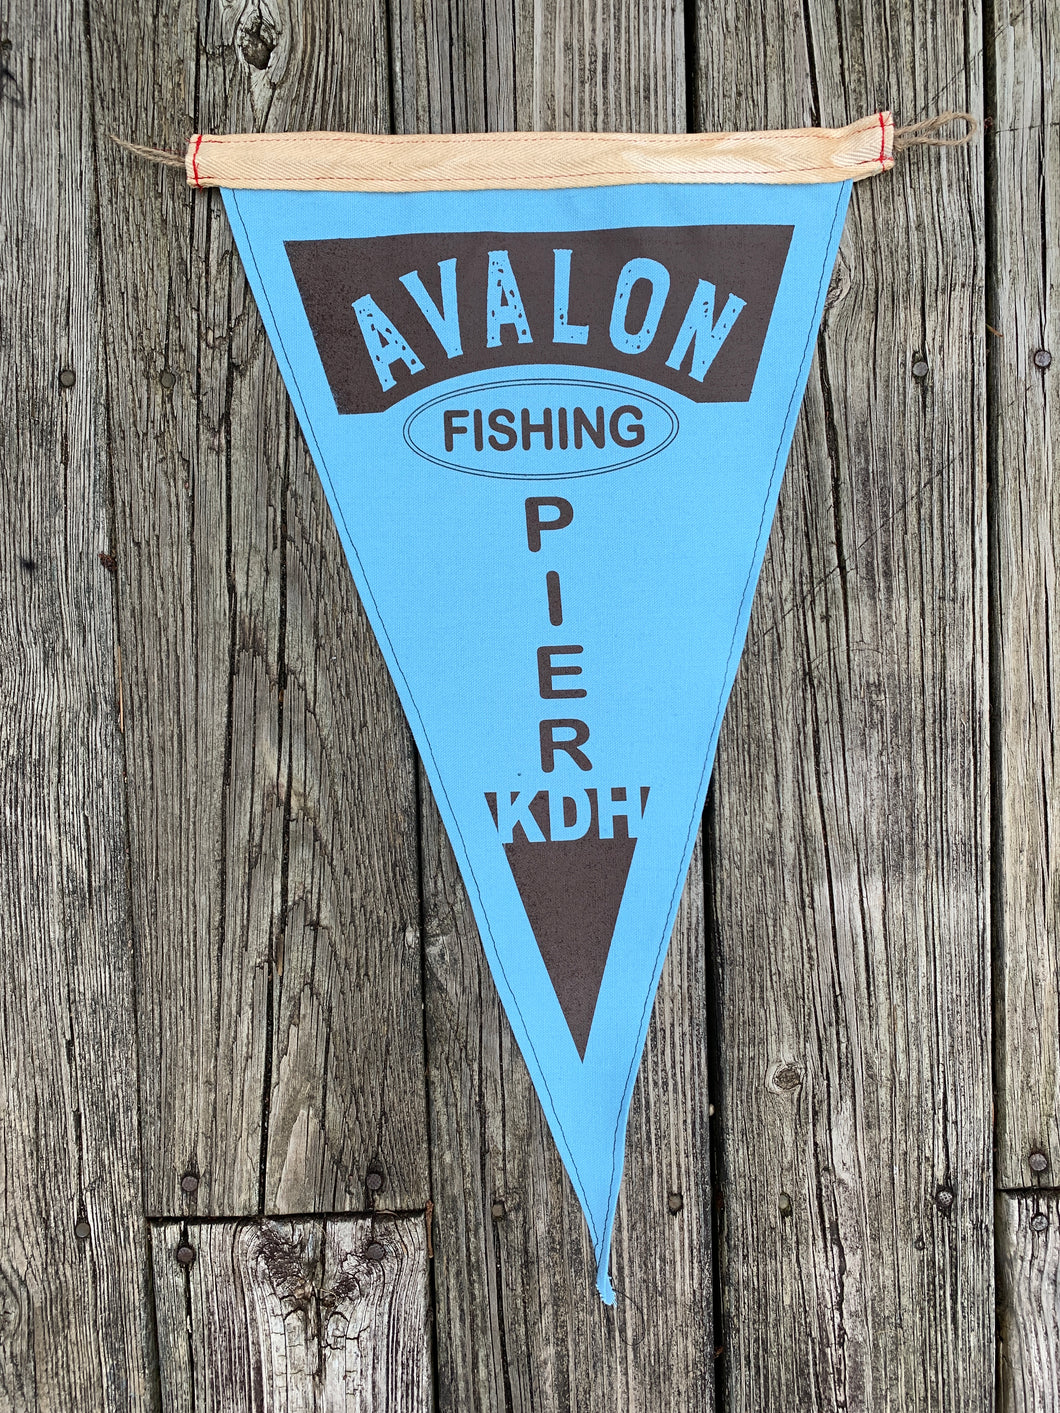 Beach Flag - Avalon Fishing Pier - OBX